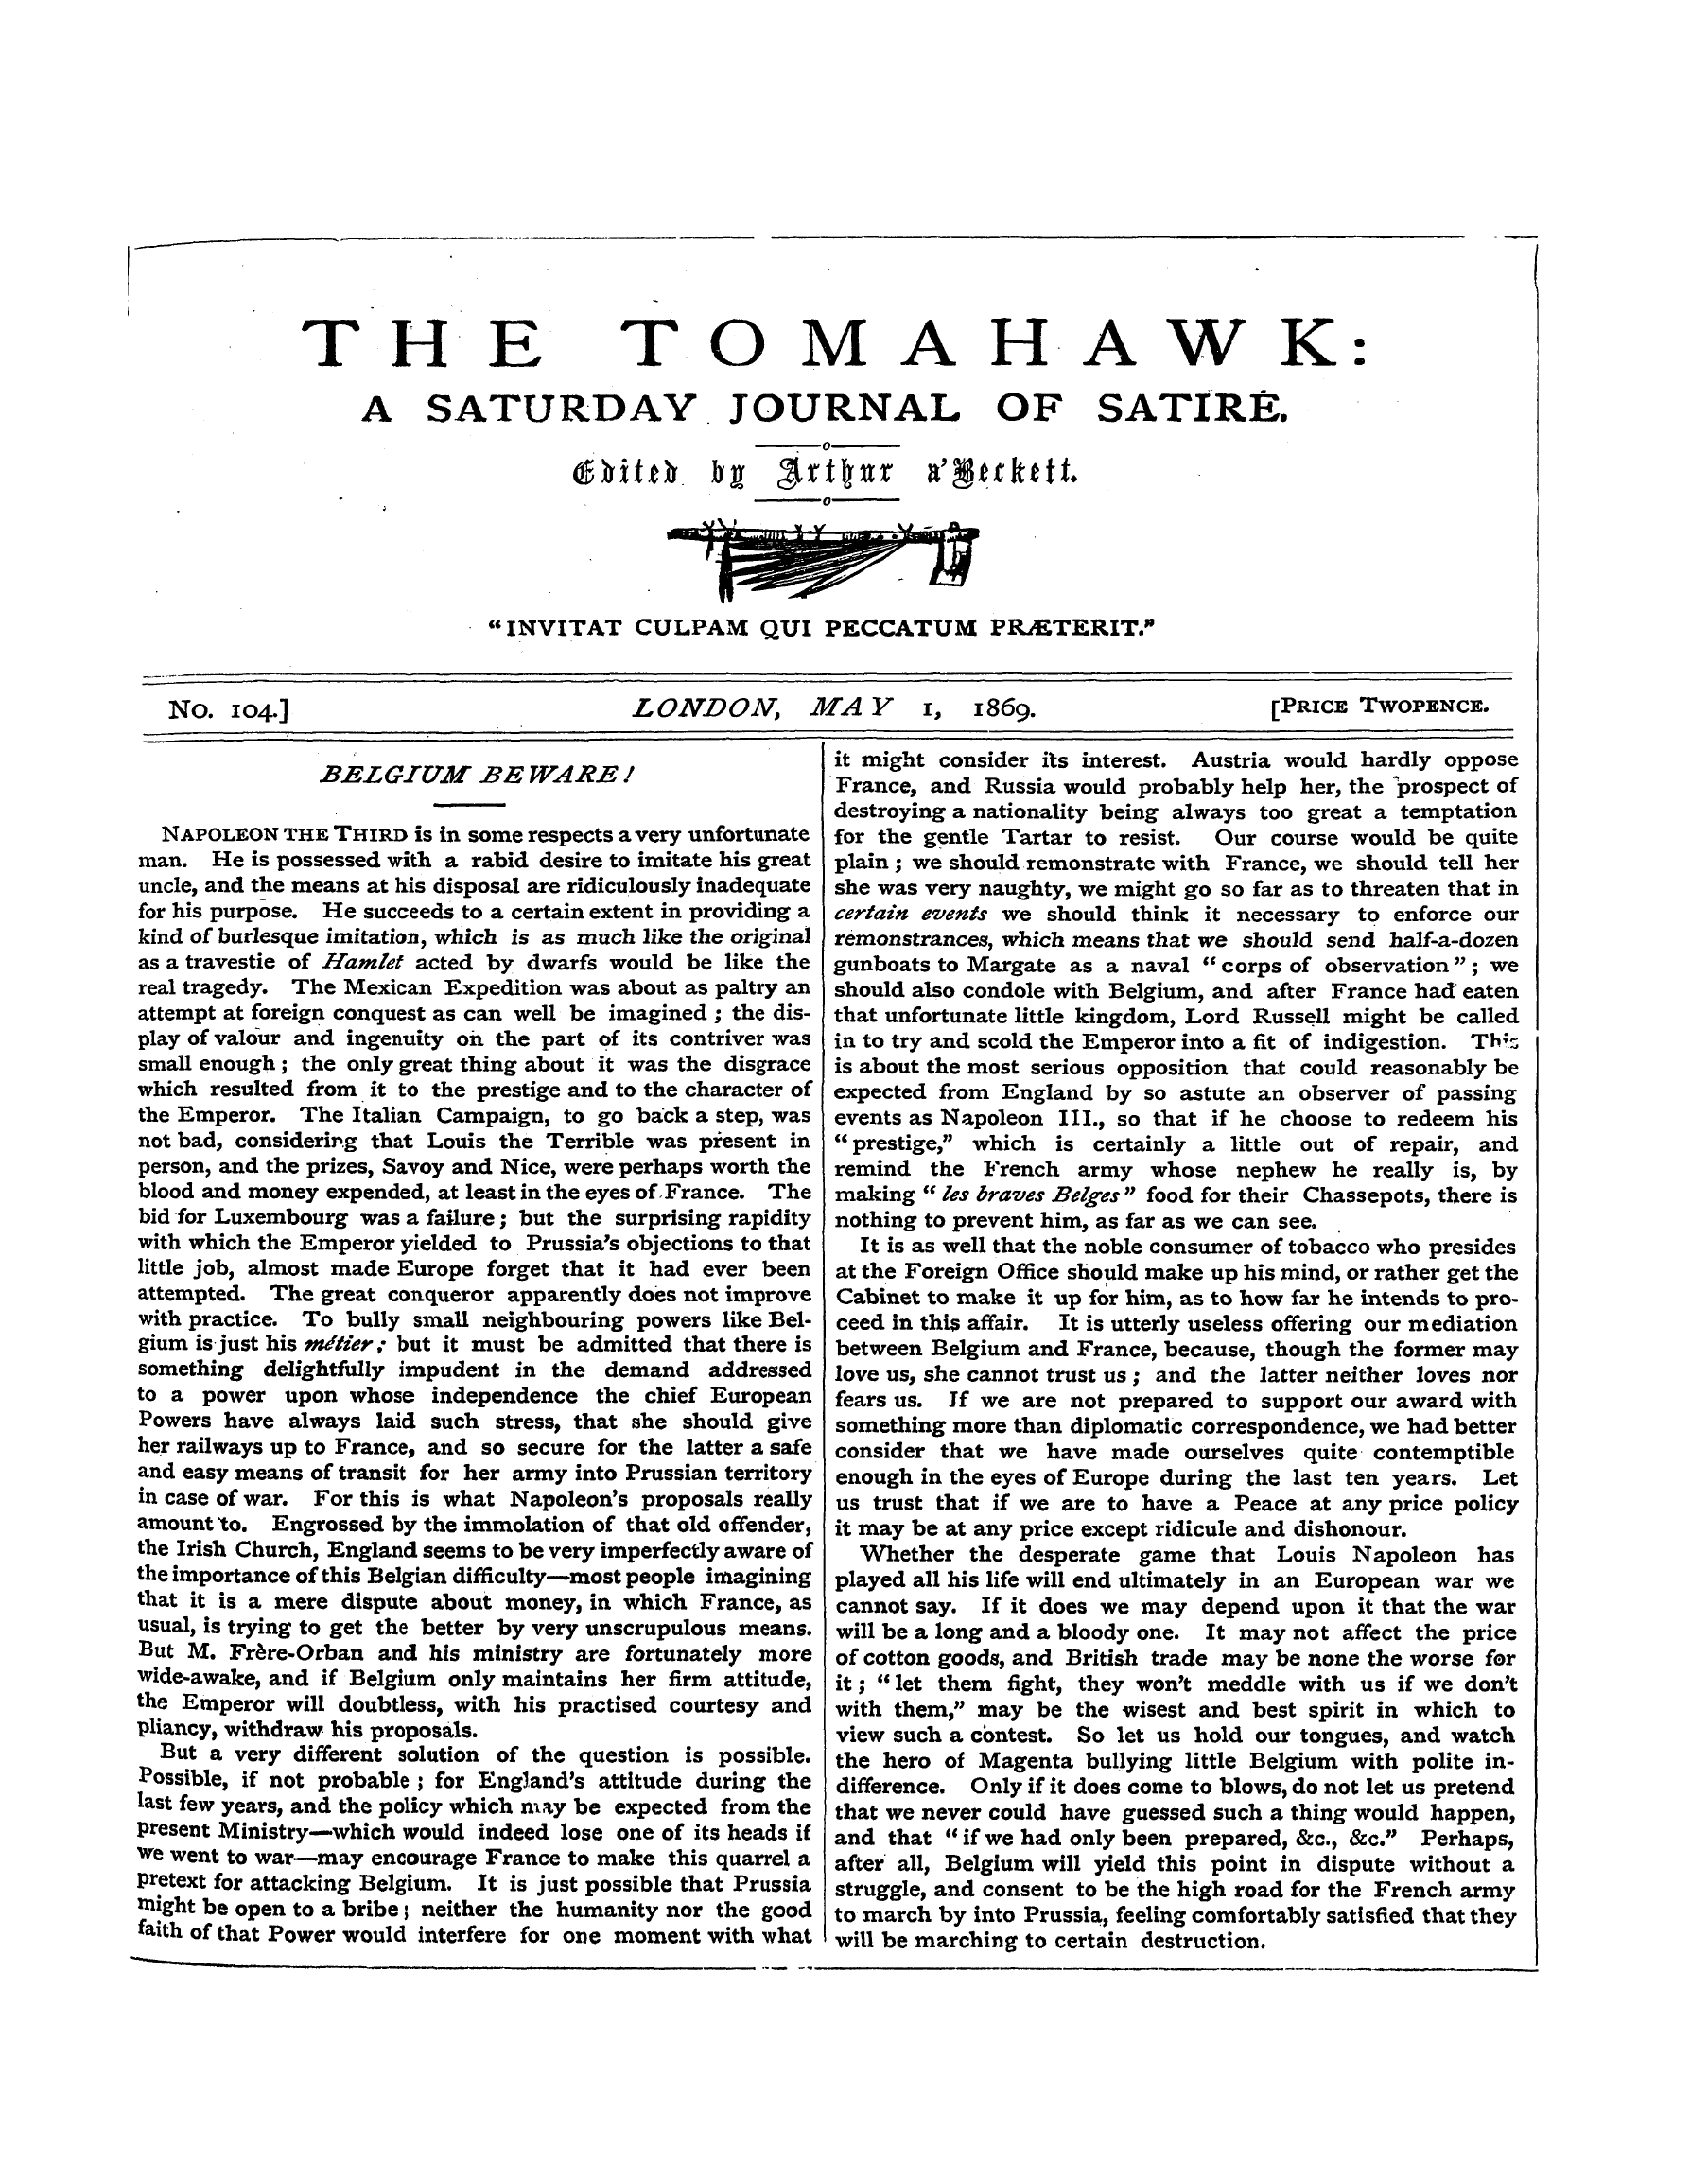 Tomahawk (1867-1870): jS F Y, 1st edition - The Tomahawk: A Saturday Journal Of Sati...